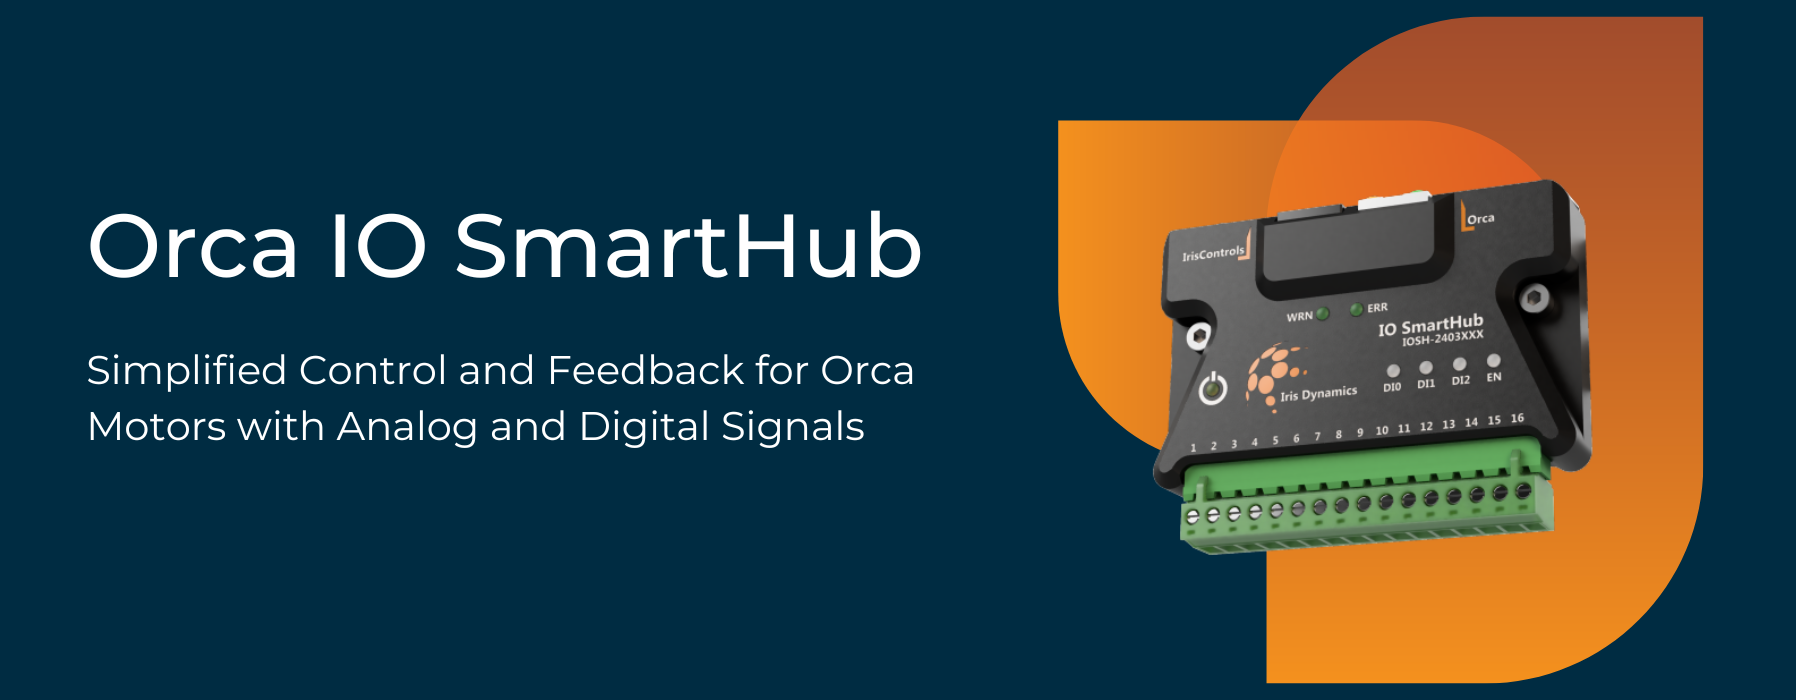 Orca IO SmartHub Banner